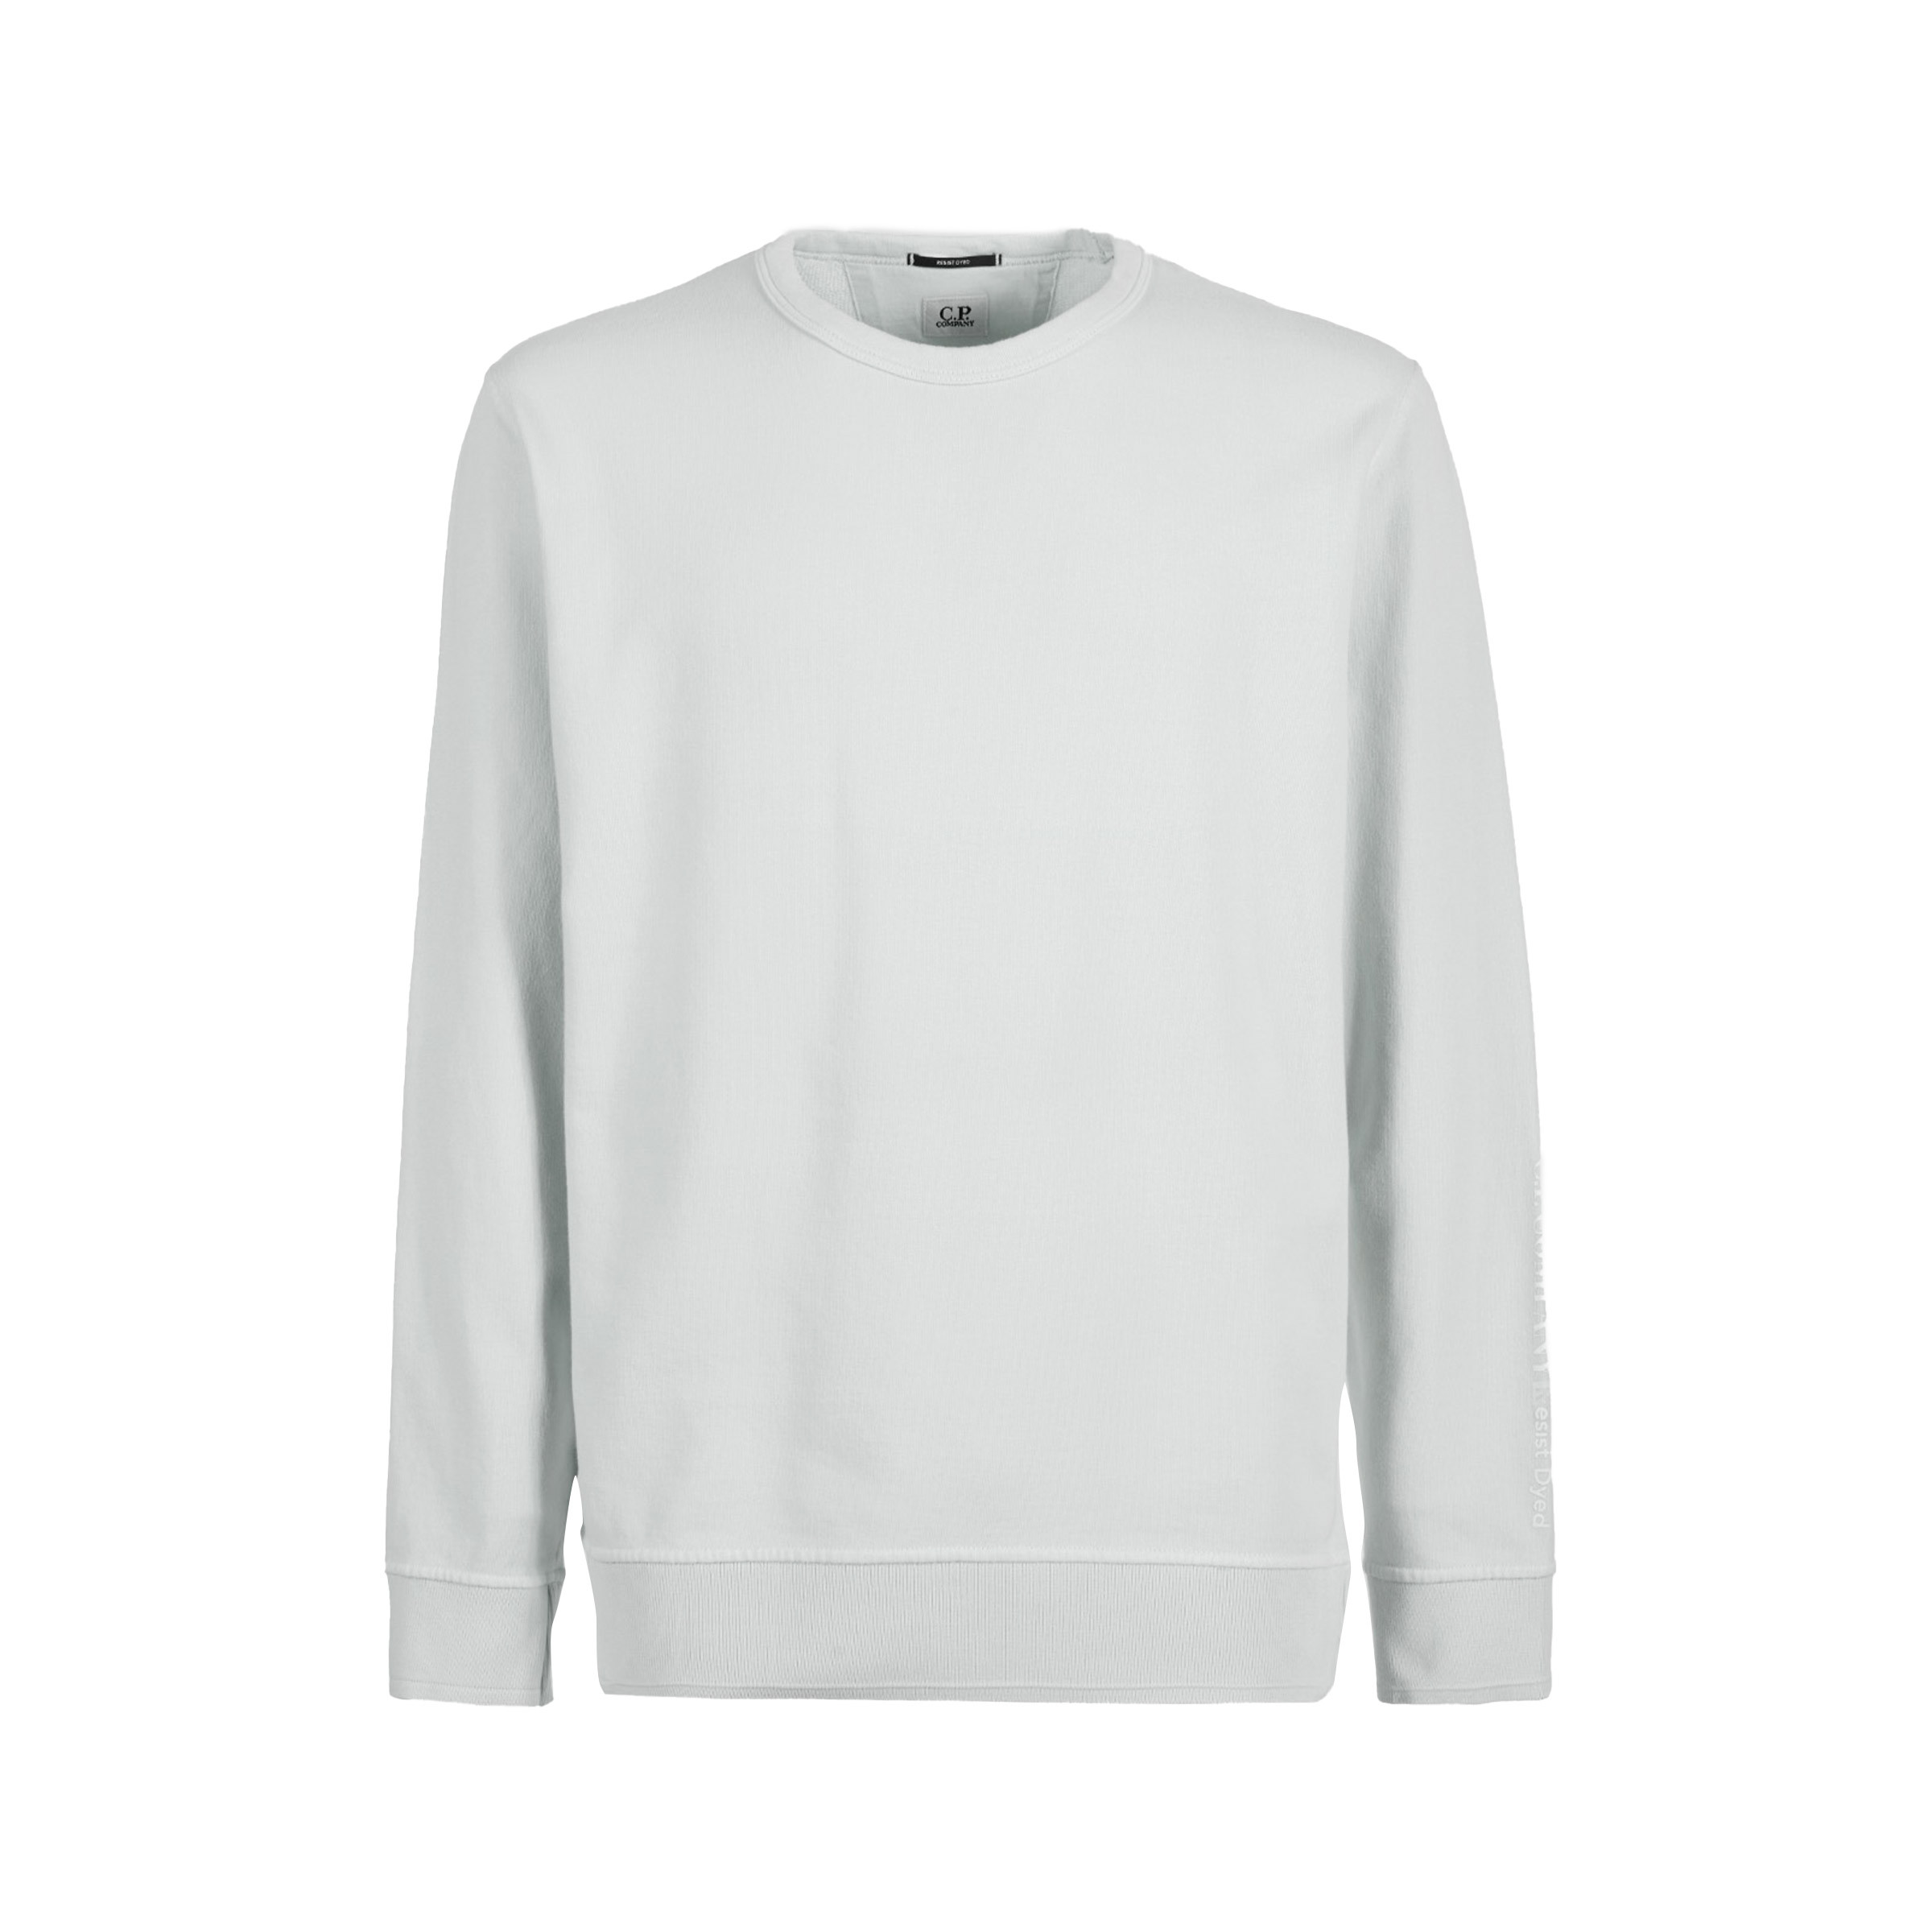 c.p. company sweatshirt man cotton fleece sleeve logo 12cmss263a-005398s-820